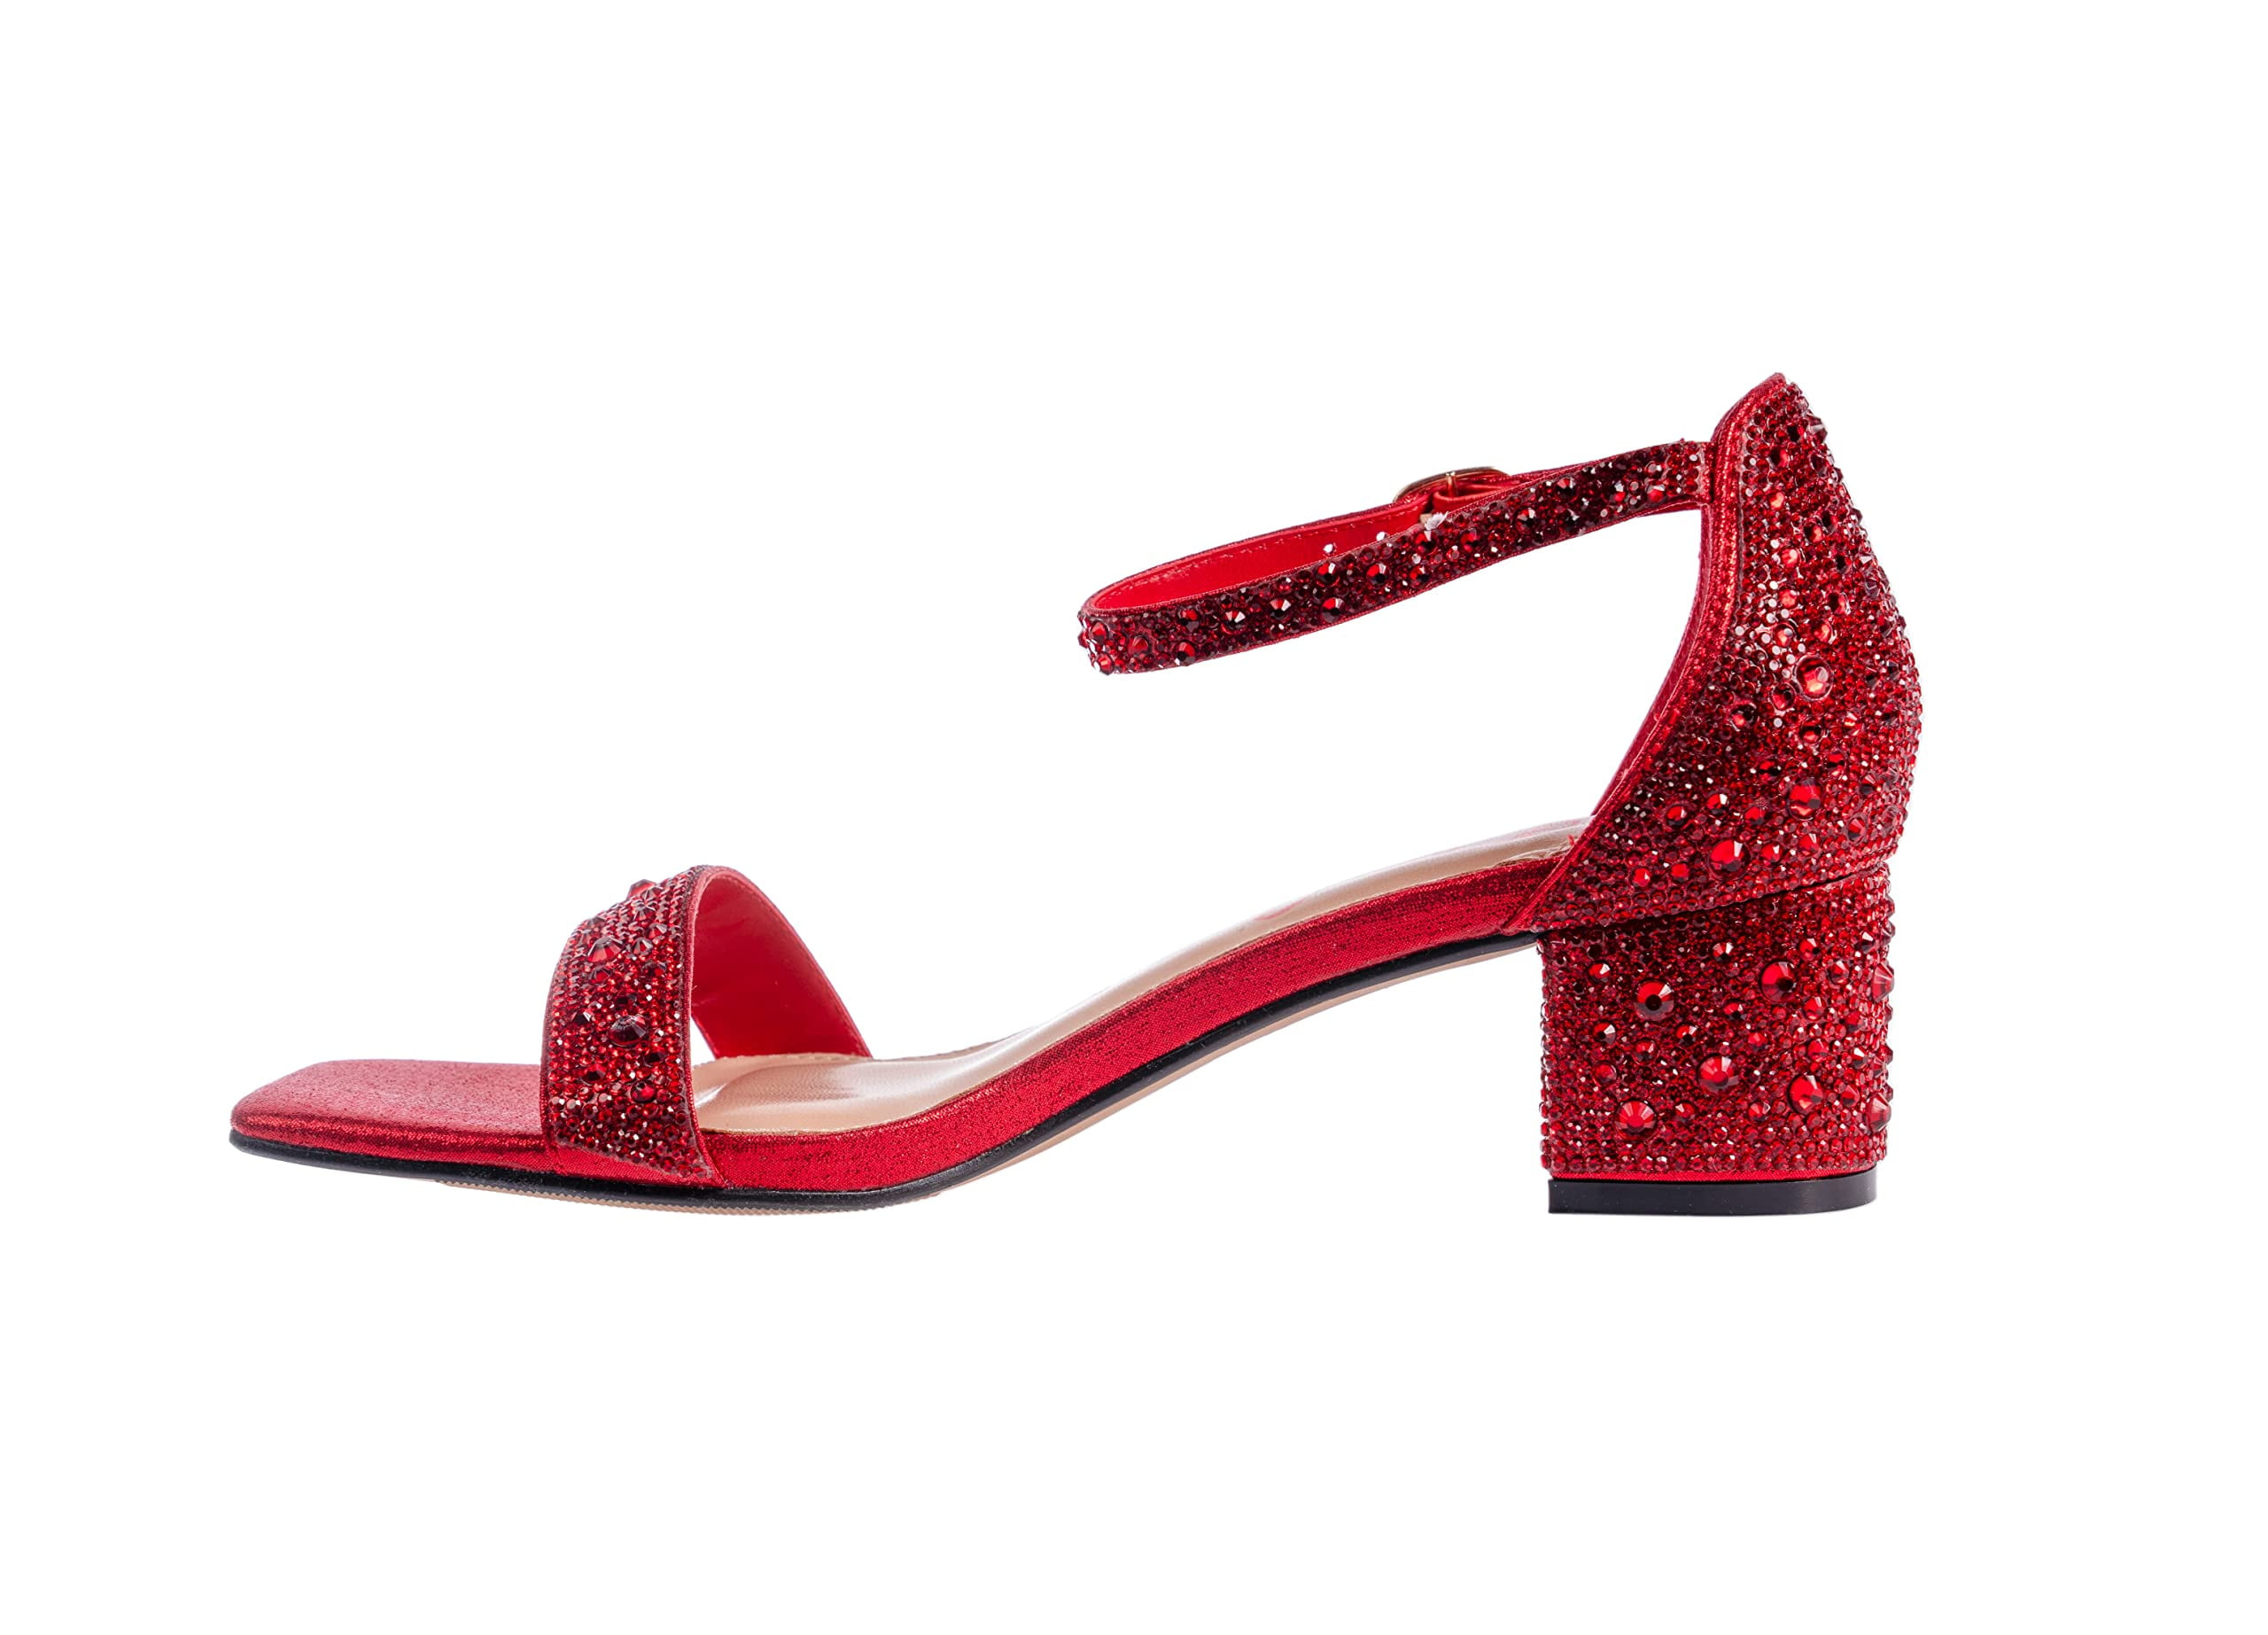 Buy Glass Heels 2 Inch online | Lazada.com.ph